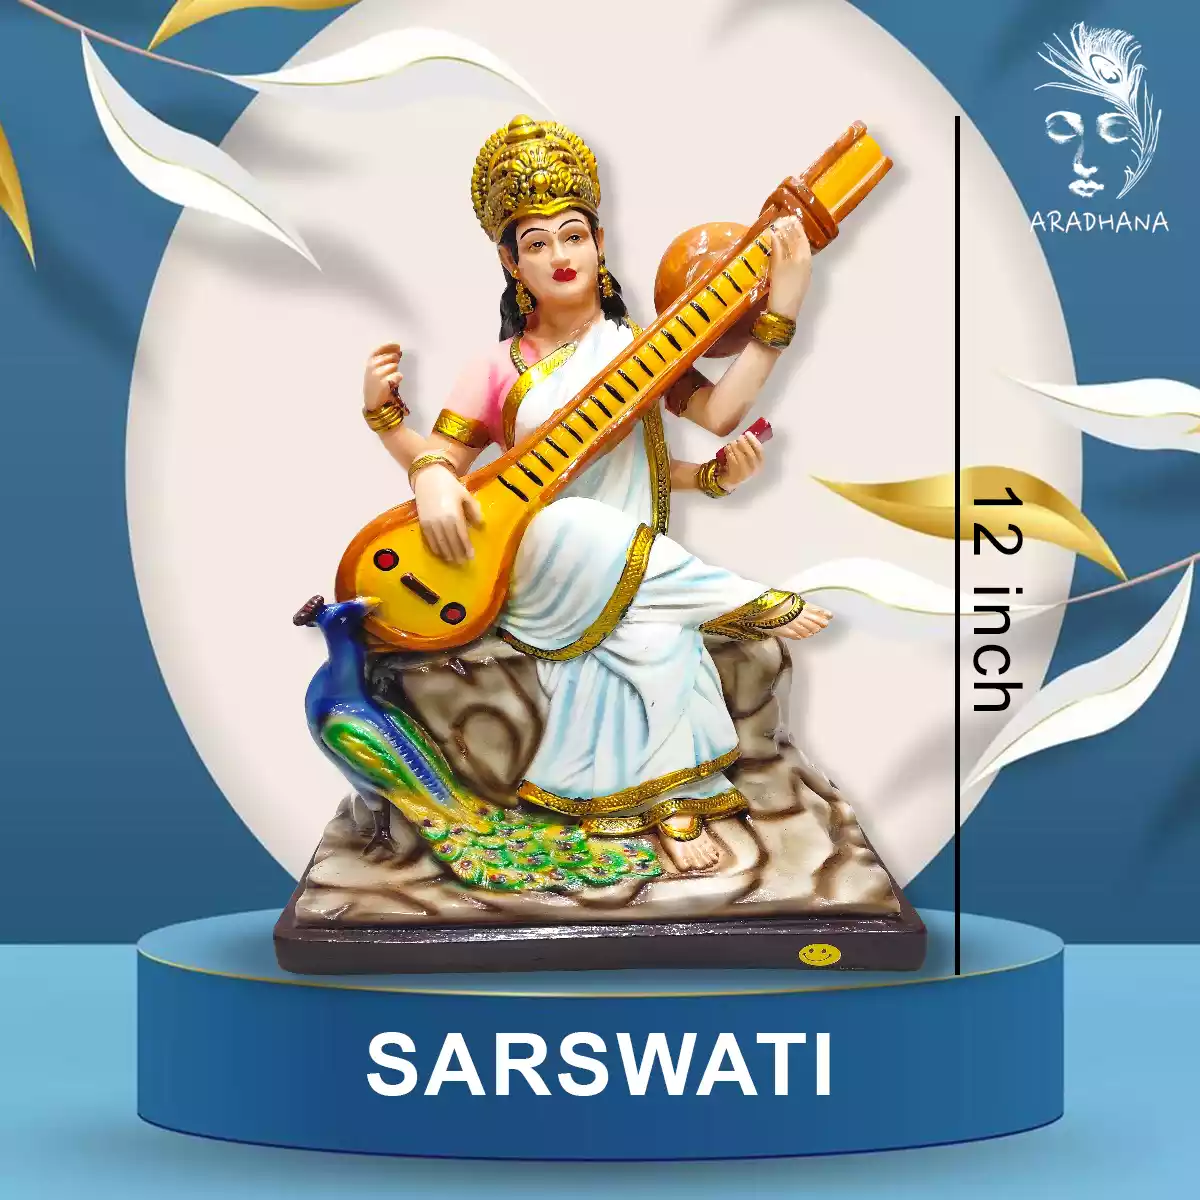 Sarswati